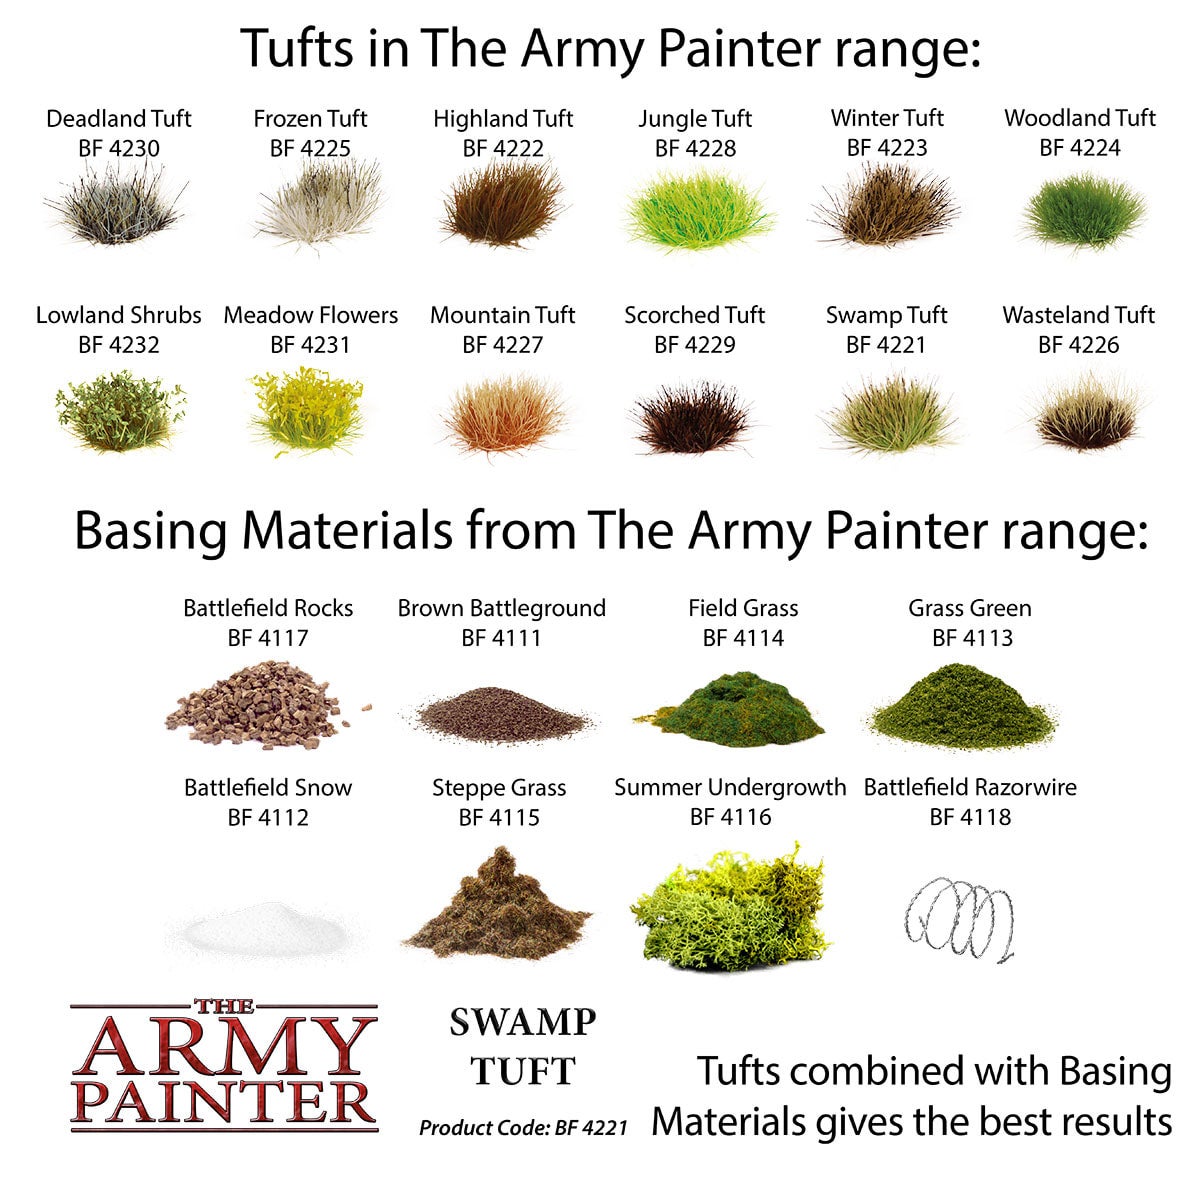 The Army Painter Airbrush Medium: Thinner - Flow Improver 100ml